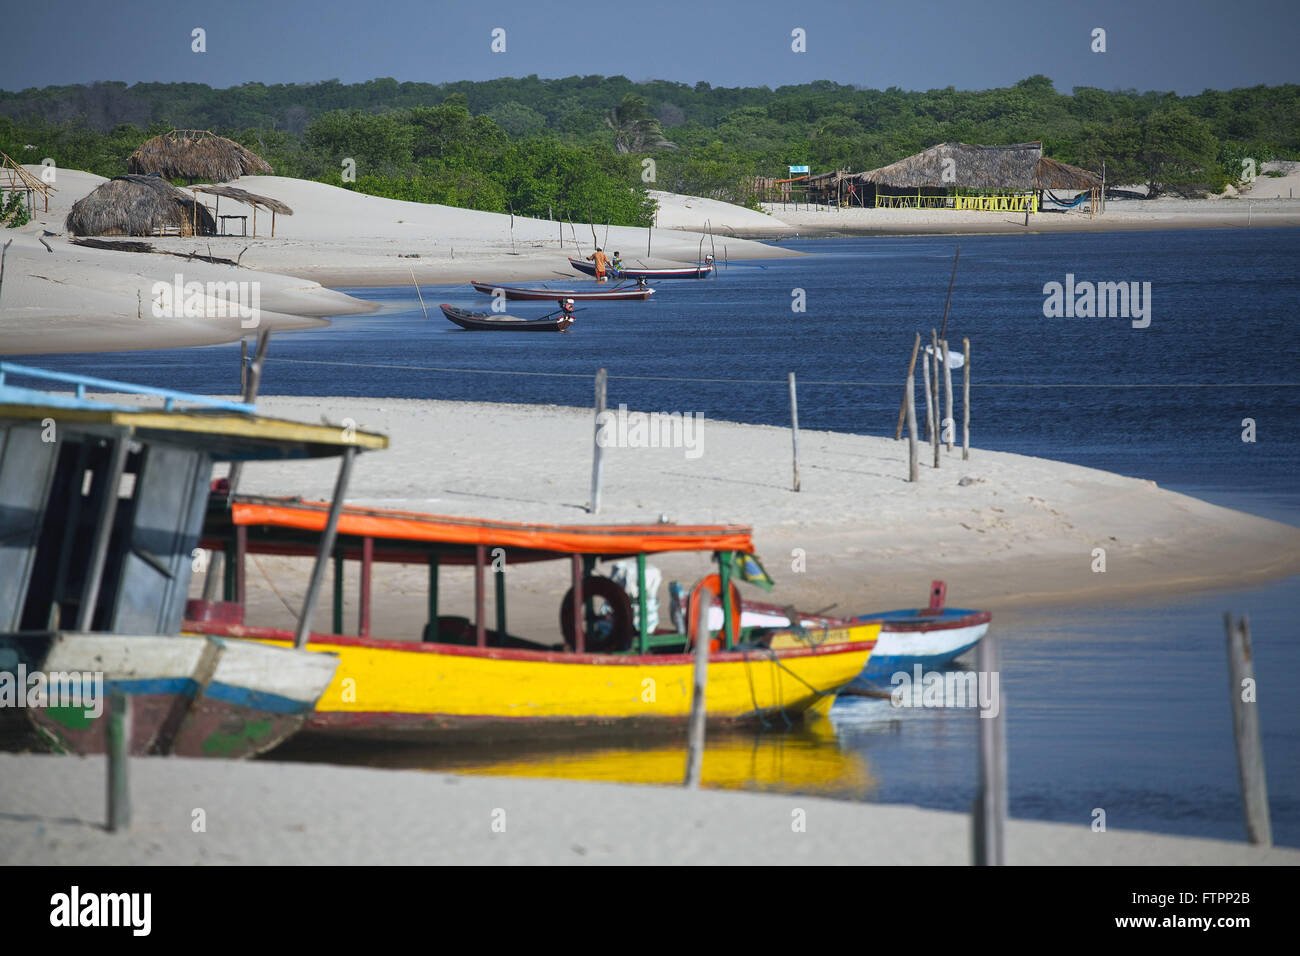 Boats on the river Preguicas Stock Photo